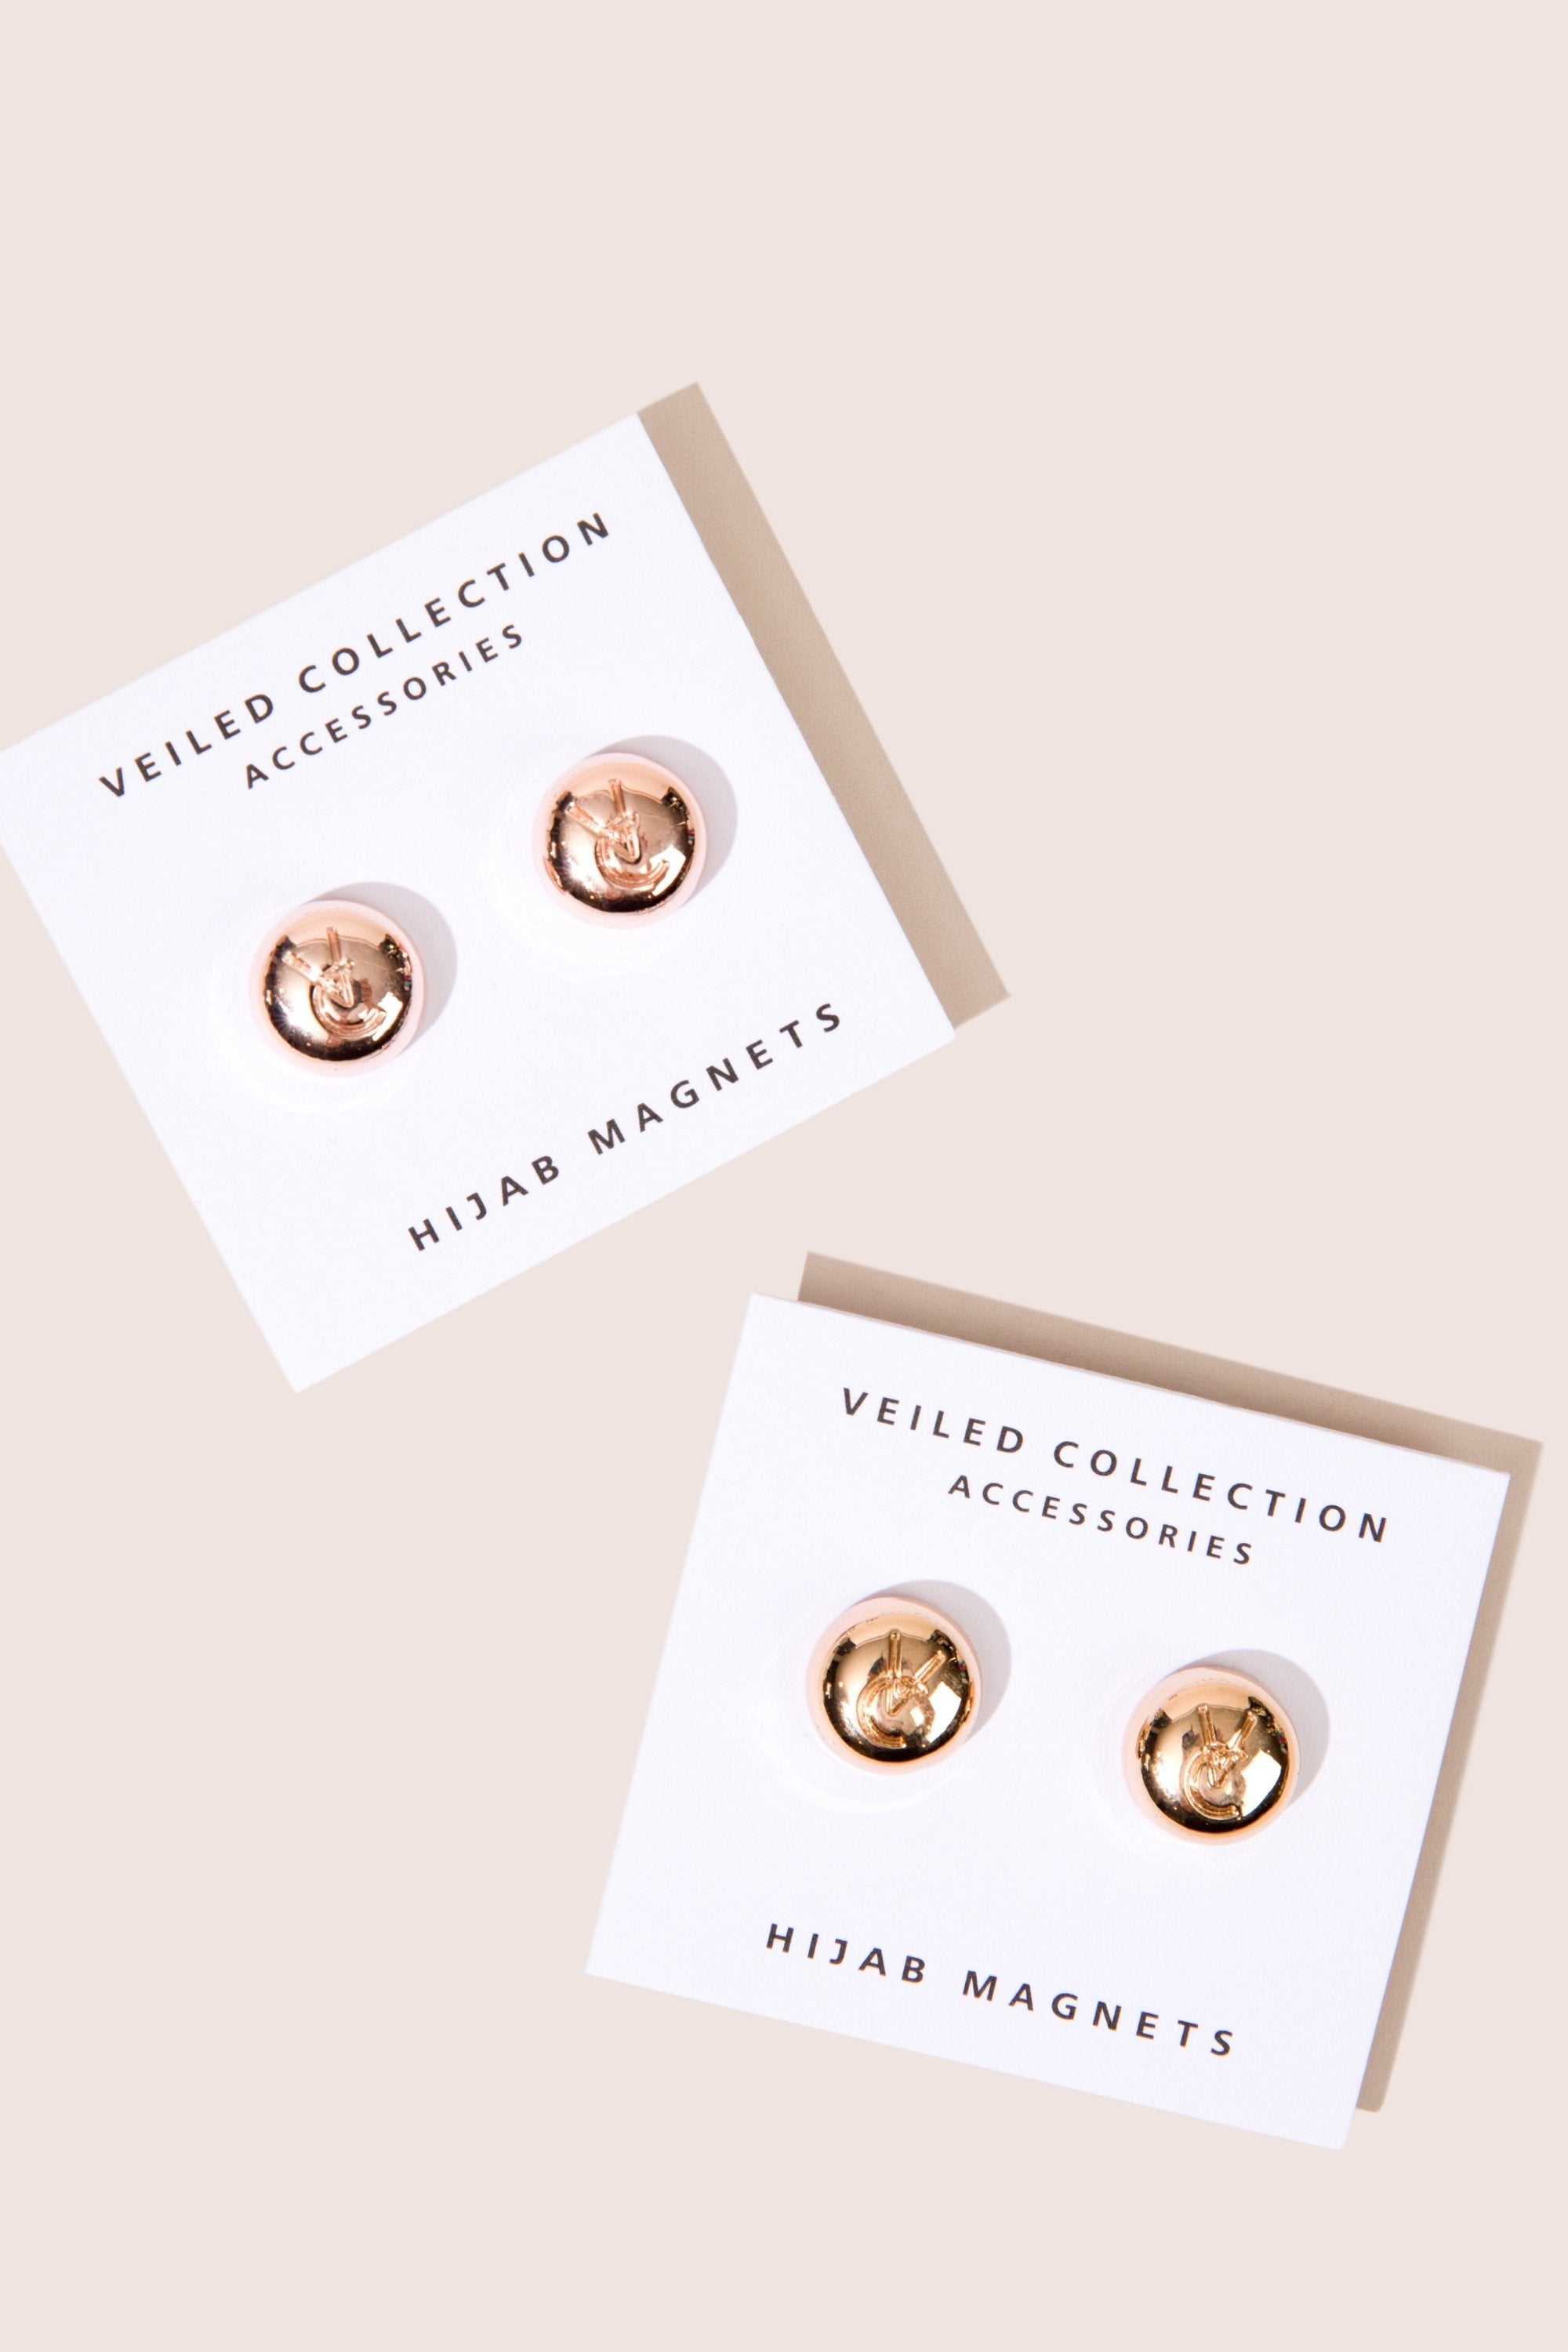 Premium Magnet Pins - Rose Gold Metallic Hijab Pins Veiled Collection 